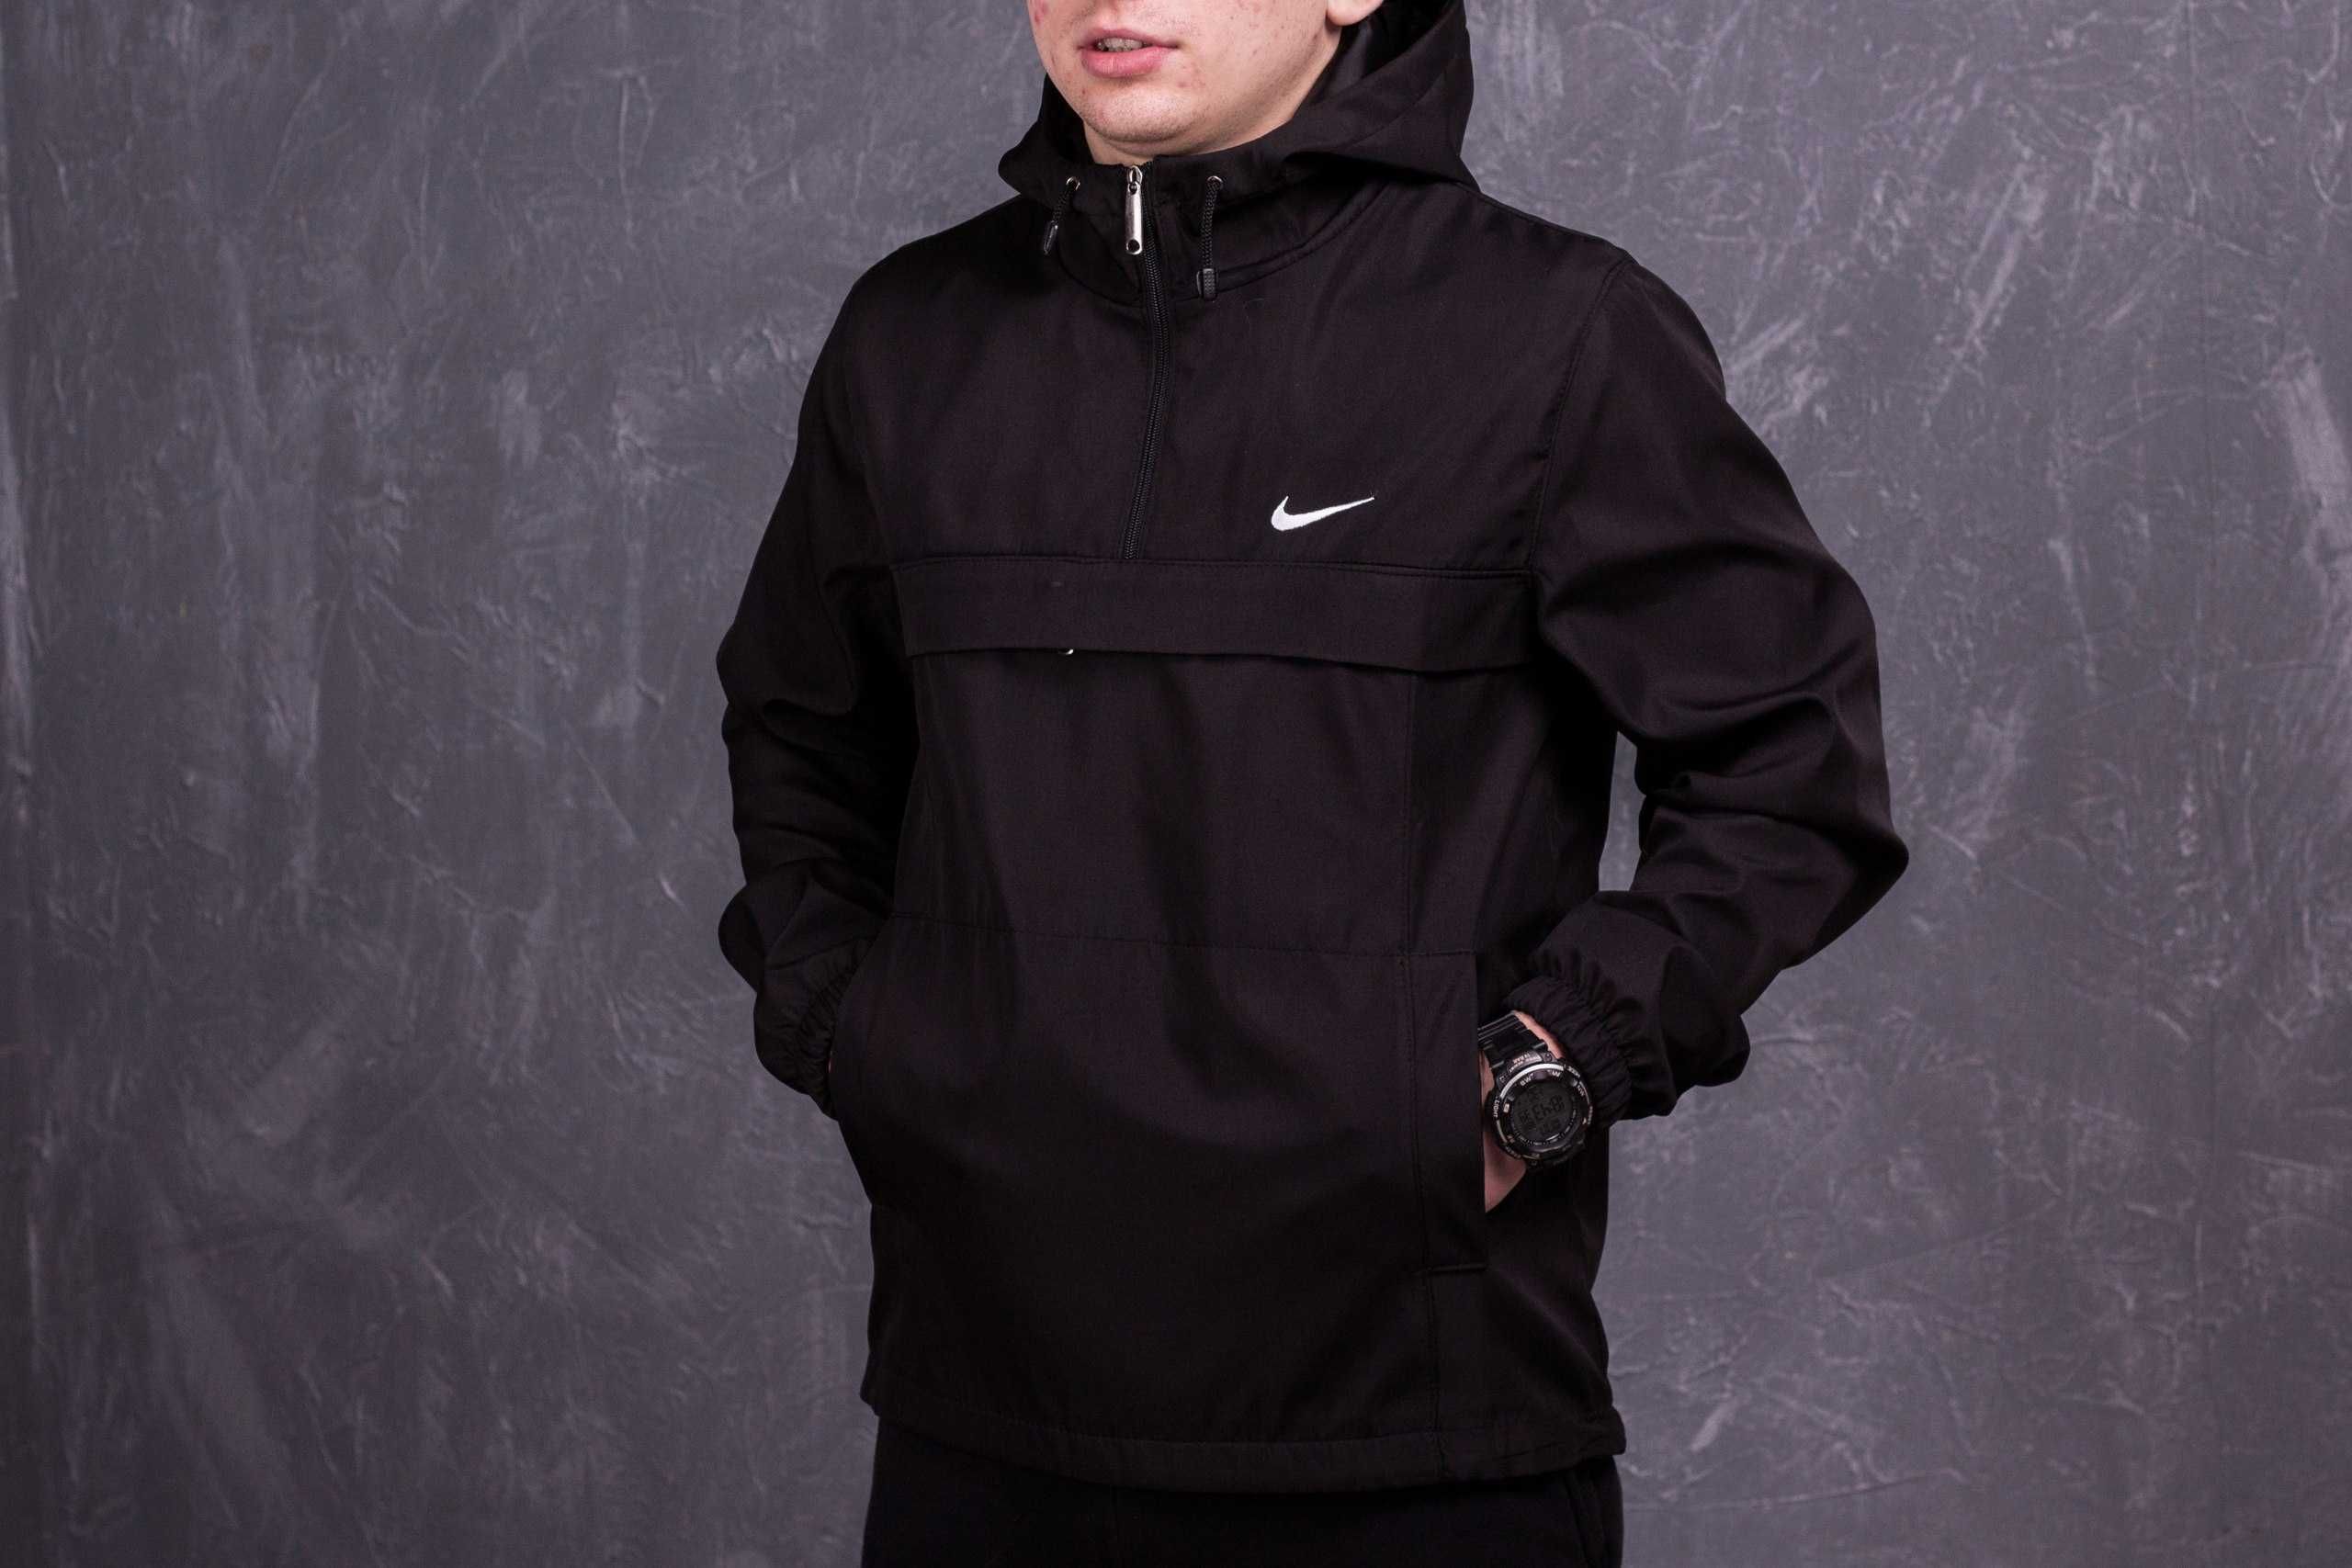 Ветровка Анорак Nike мужская куртка спортивная весенняя осенняя Найк